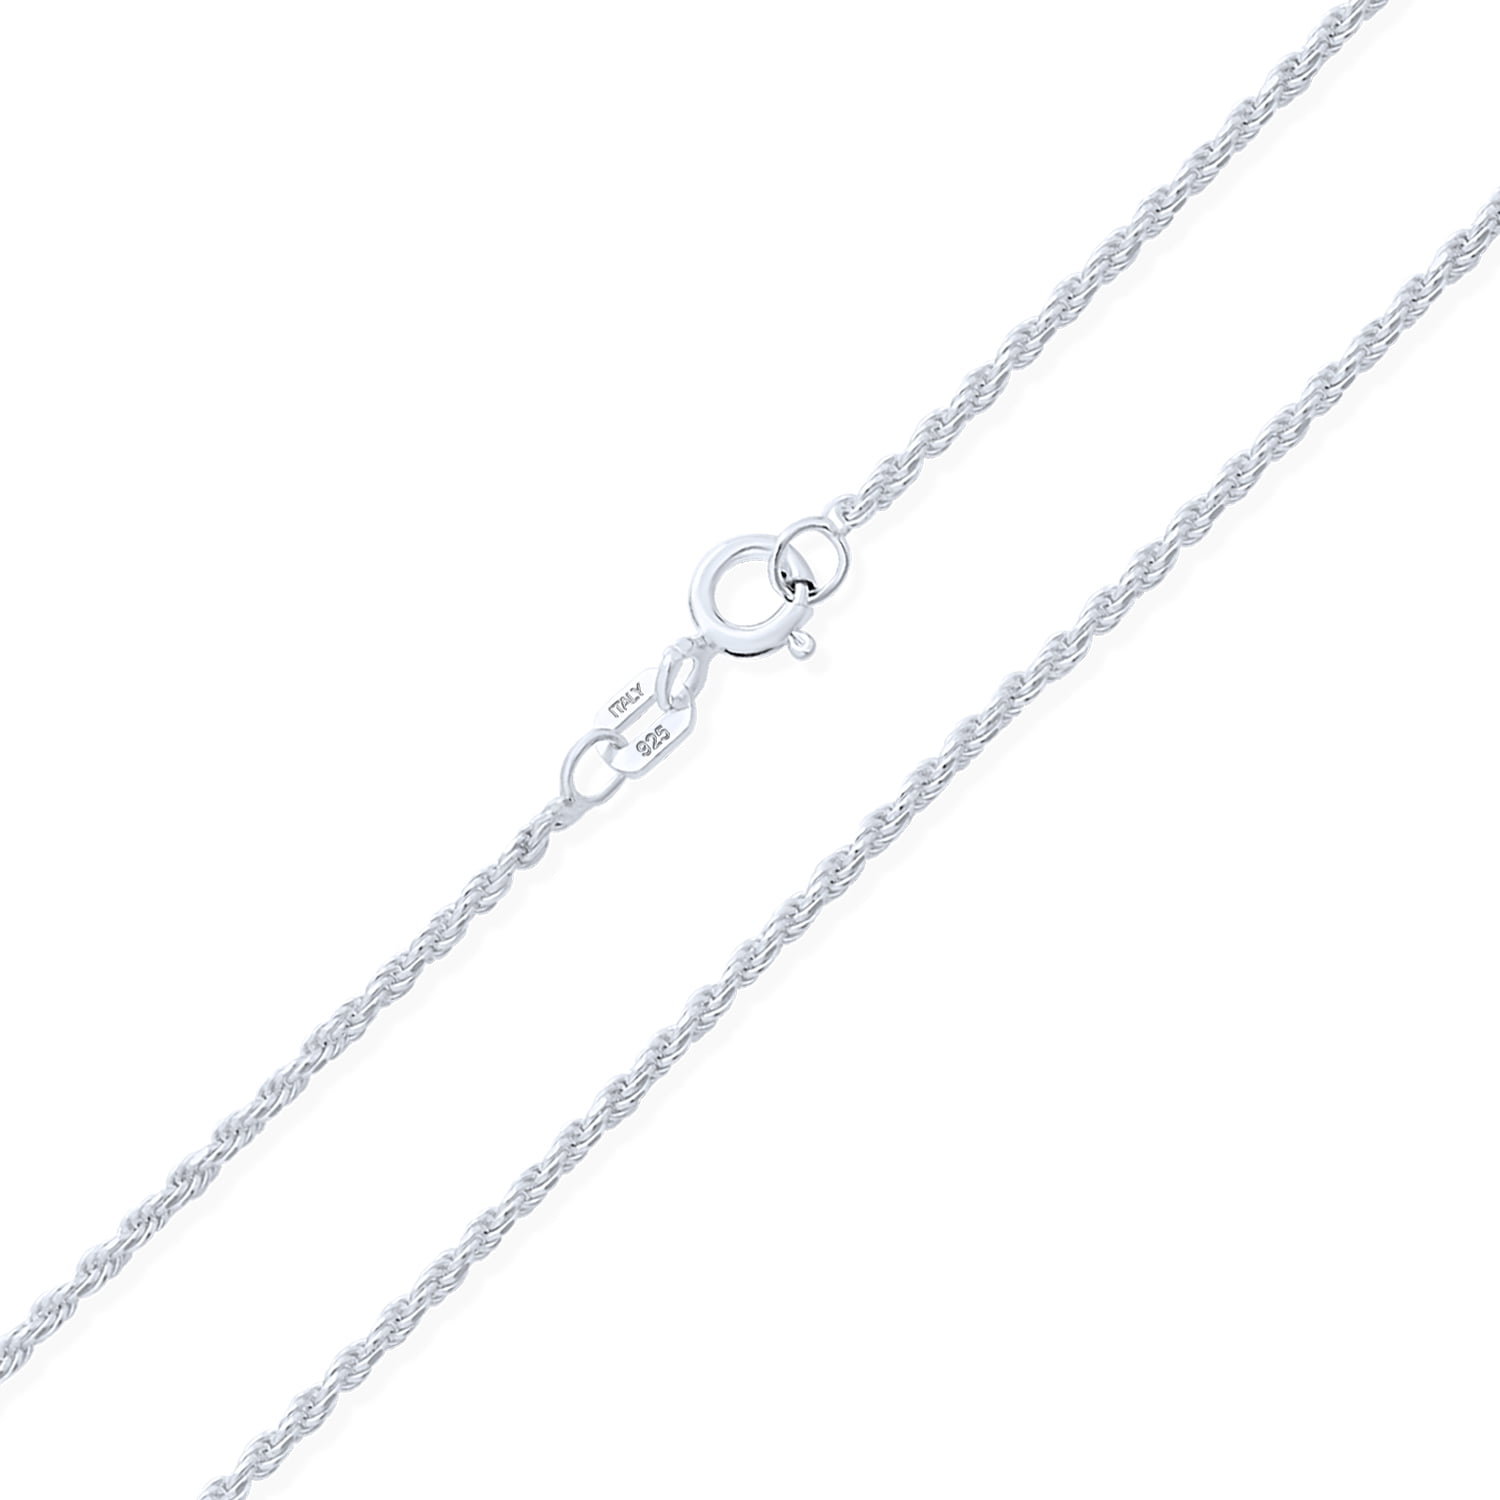 Brilliant Bijou 10k White Gold Cable Chain Necklace 